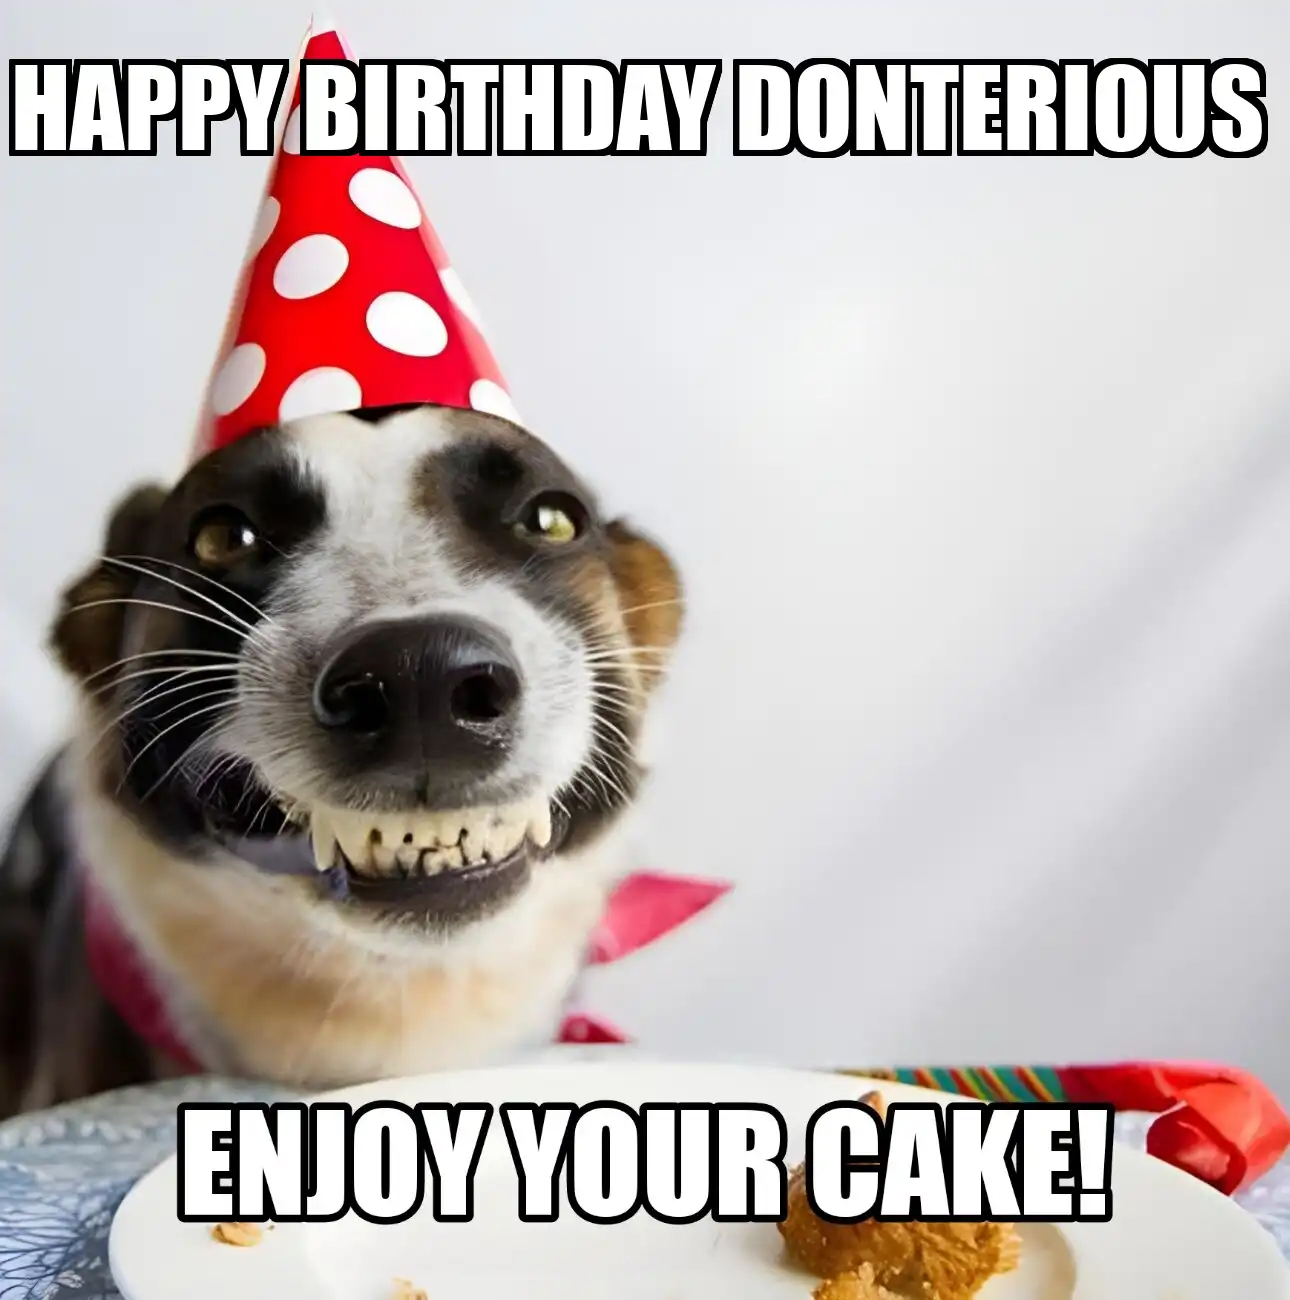 Happy Birthday Donterious Enjoy Your Cake Dog Meme